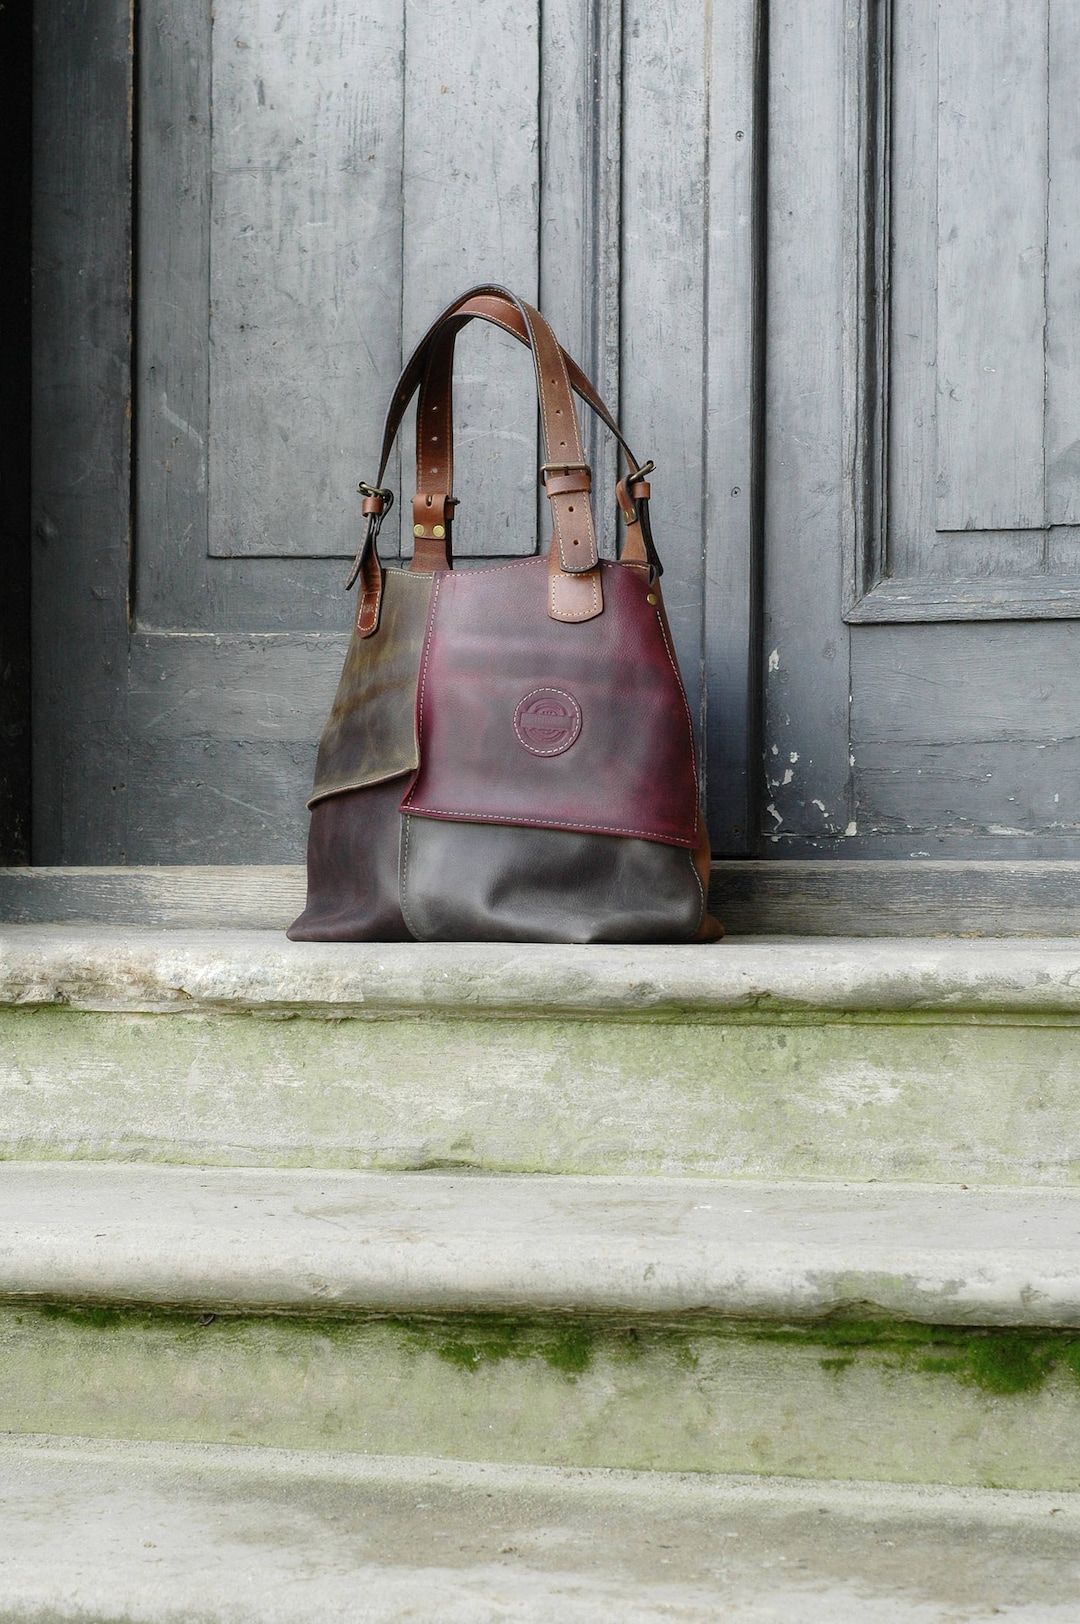 Merci - Authenticated Handbag - Leather Burgundy Plain for Women, Never Worn